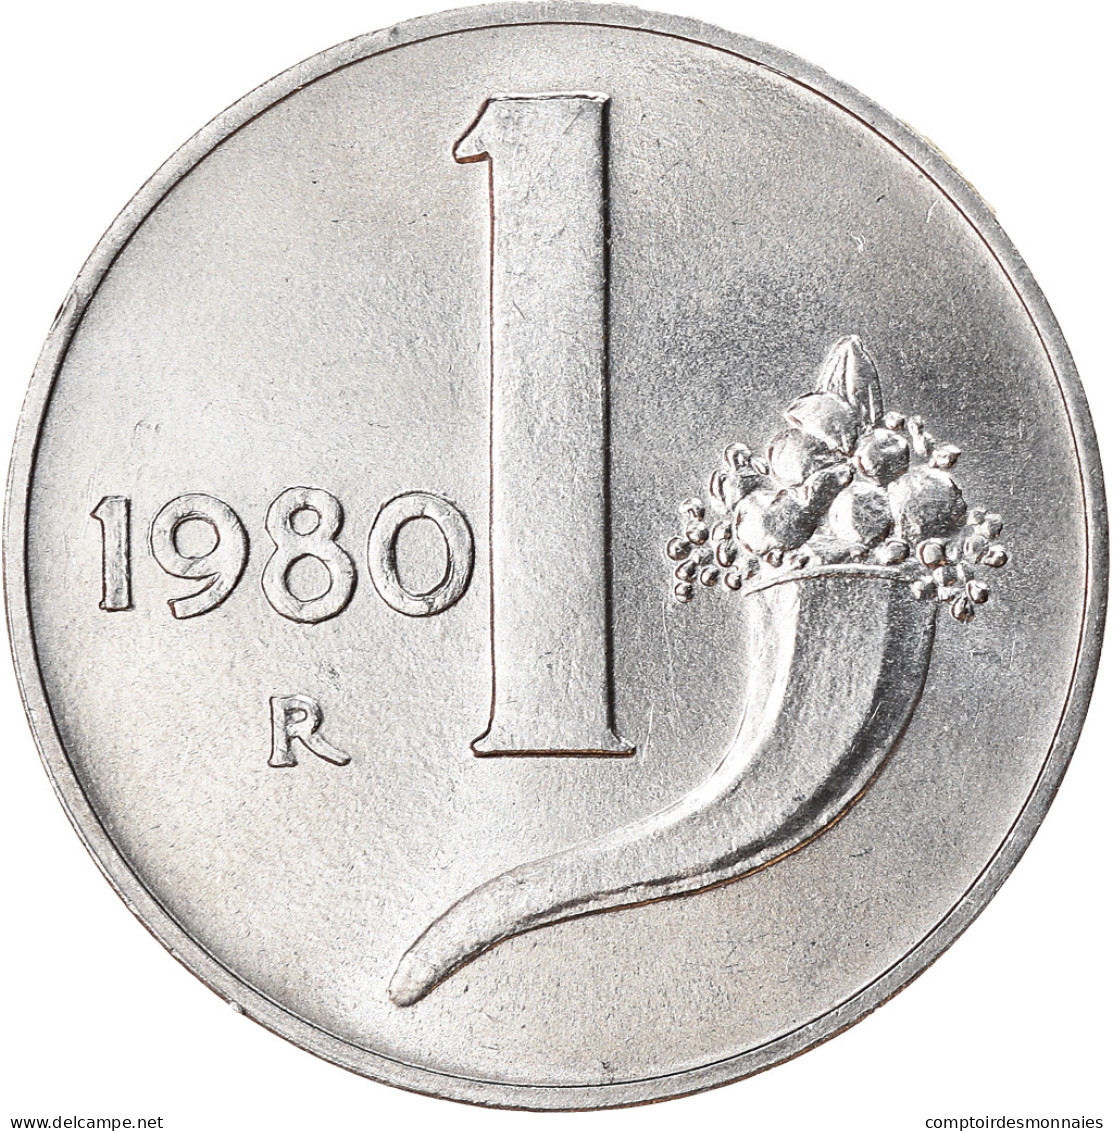 Monnaie, Italie, Lira, 1980, Rome, TTB+, Aluminium, KM:91 - 1 Lira